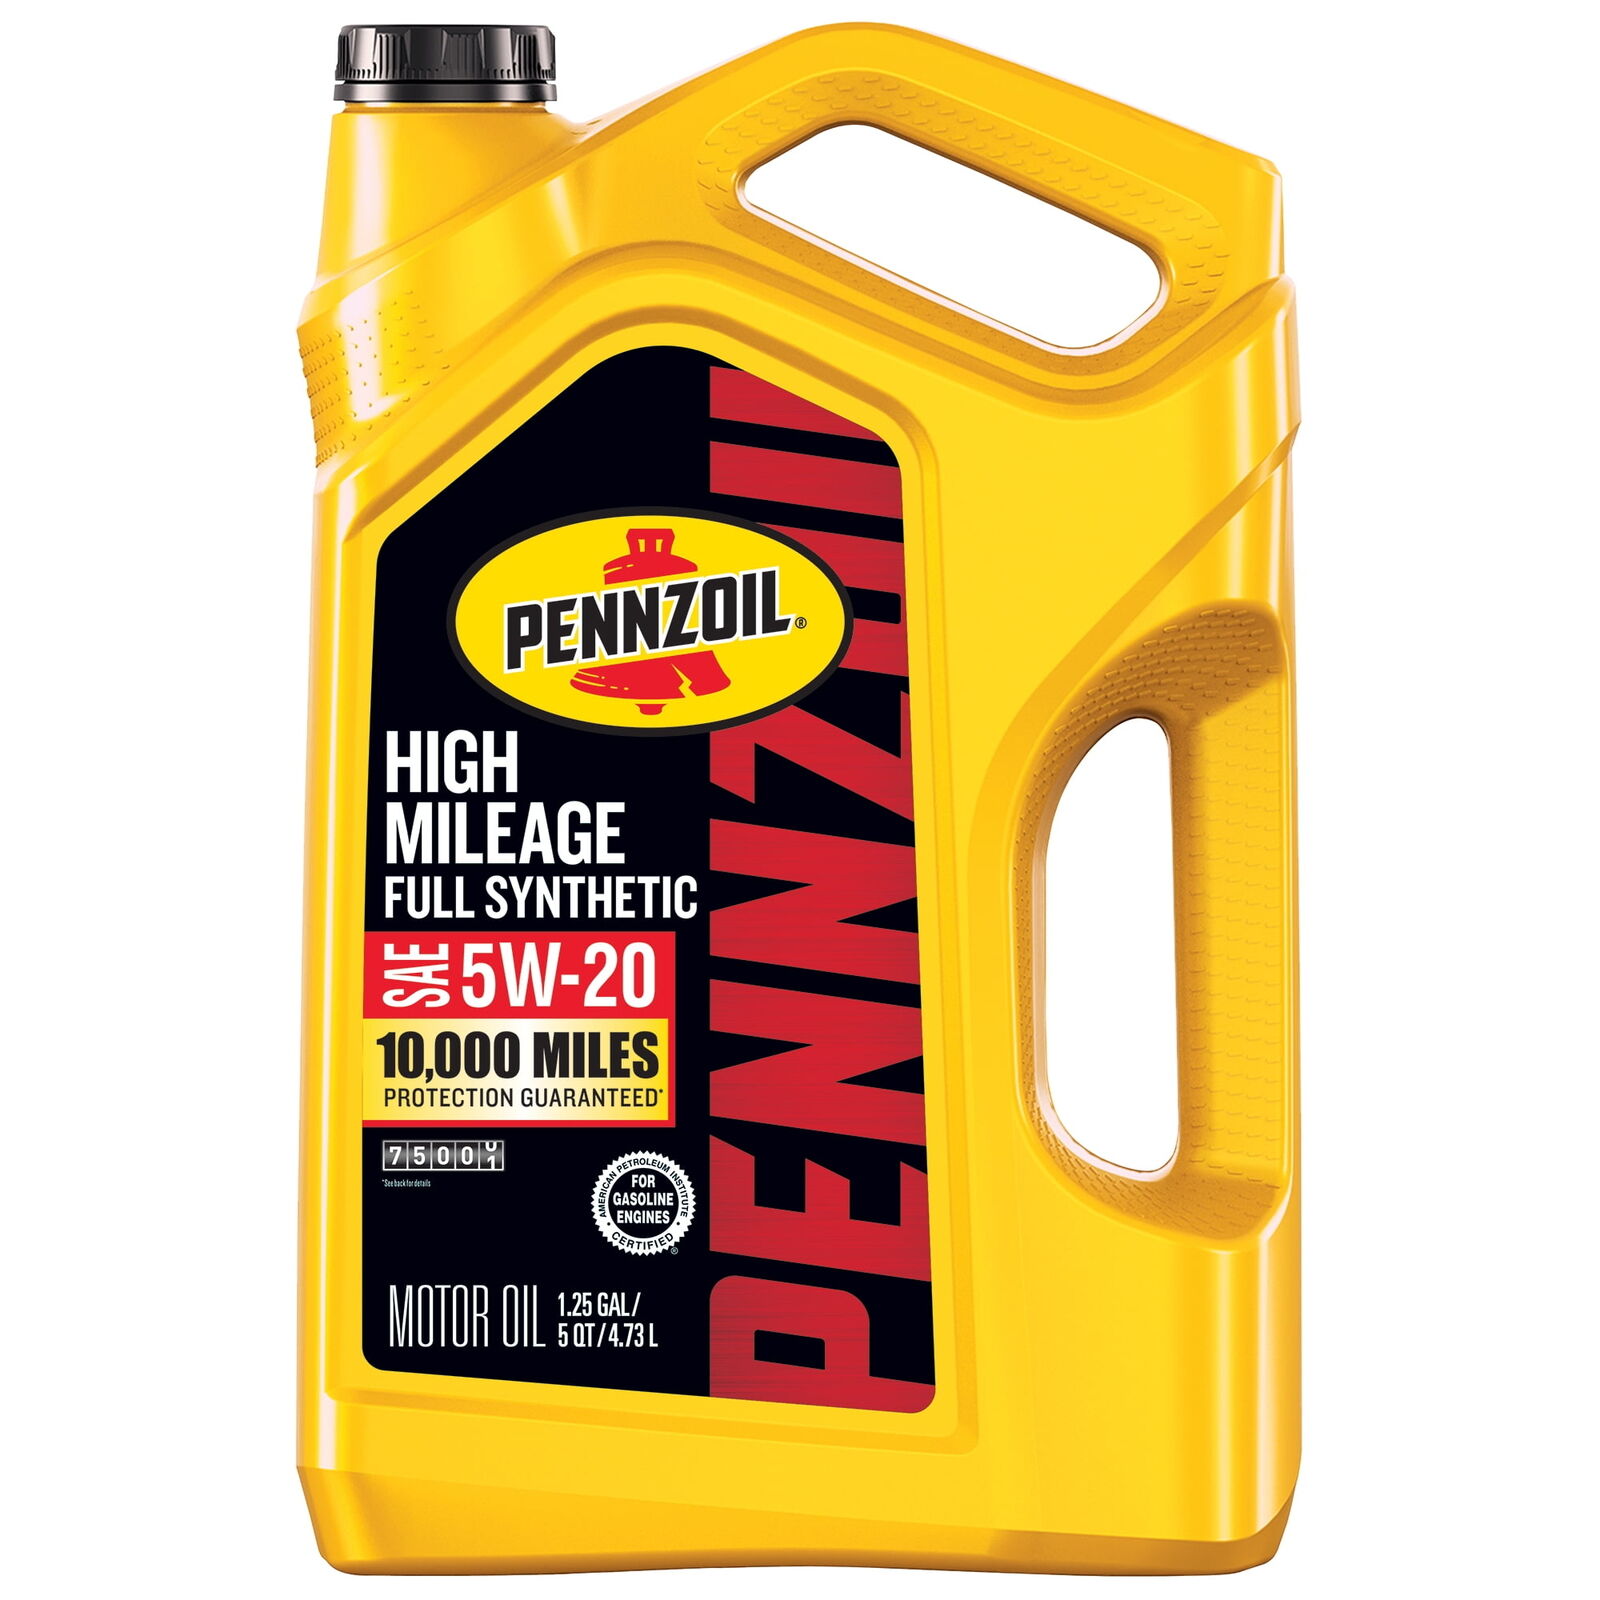 Pennzoil High Mileage Full Synthetic 5W-20 Motor Oil, 5 Quart